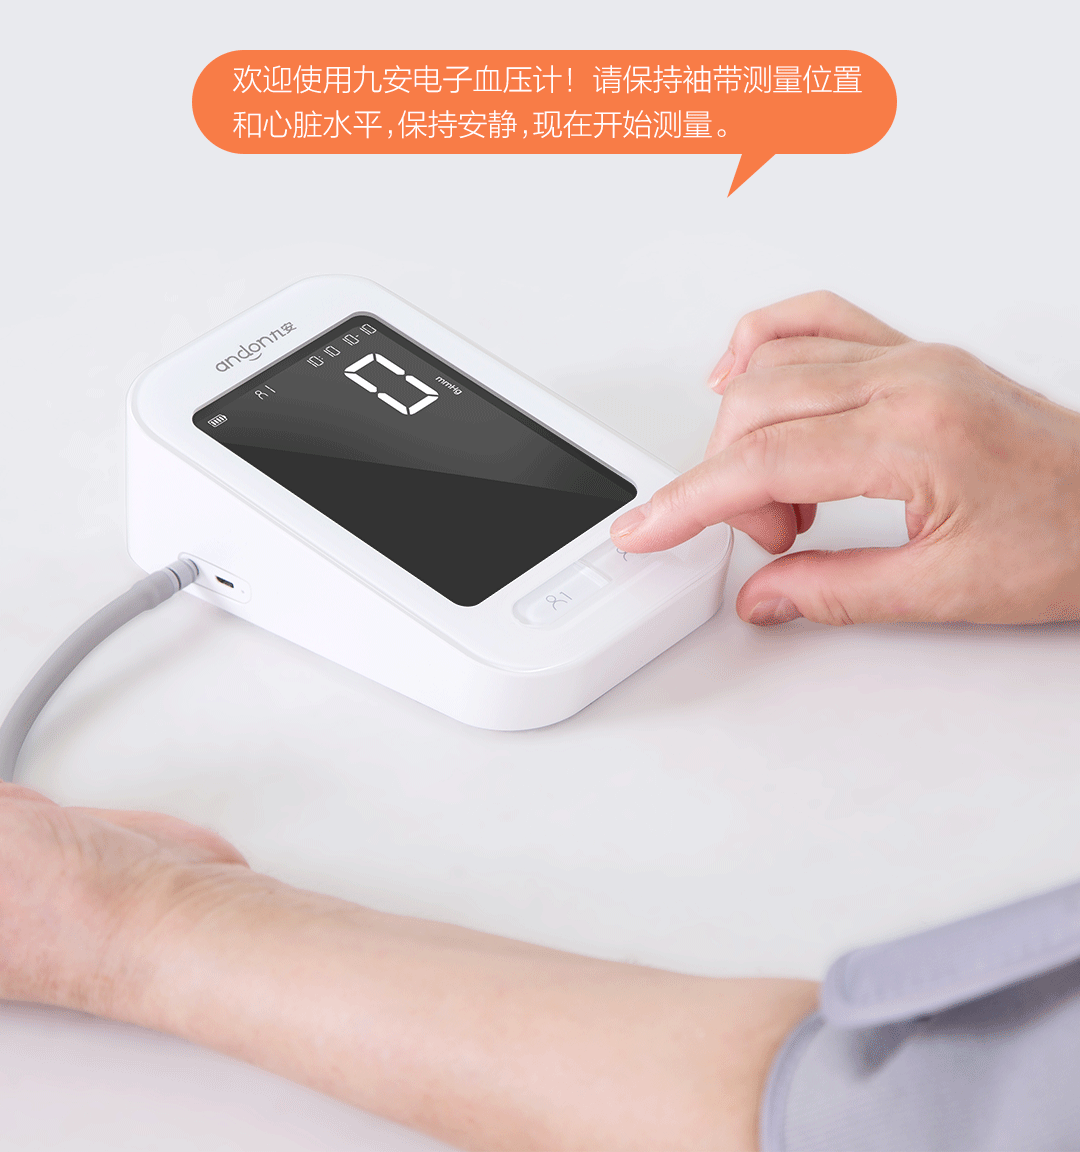 Xiaomi Jiu'an Smart Blood Pressure Monitor jetzt im Crowdfunding